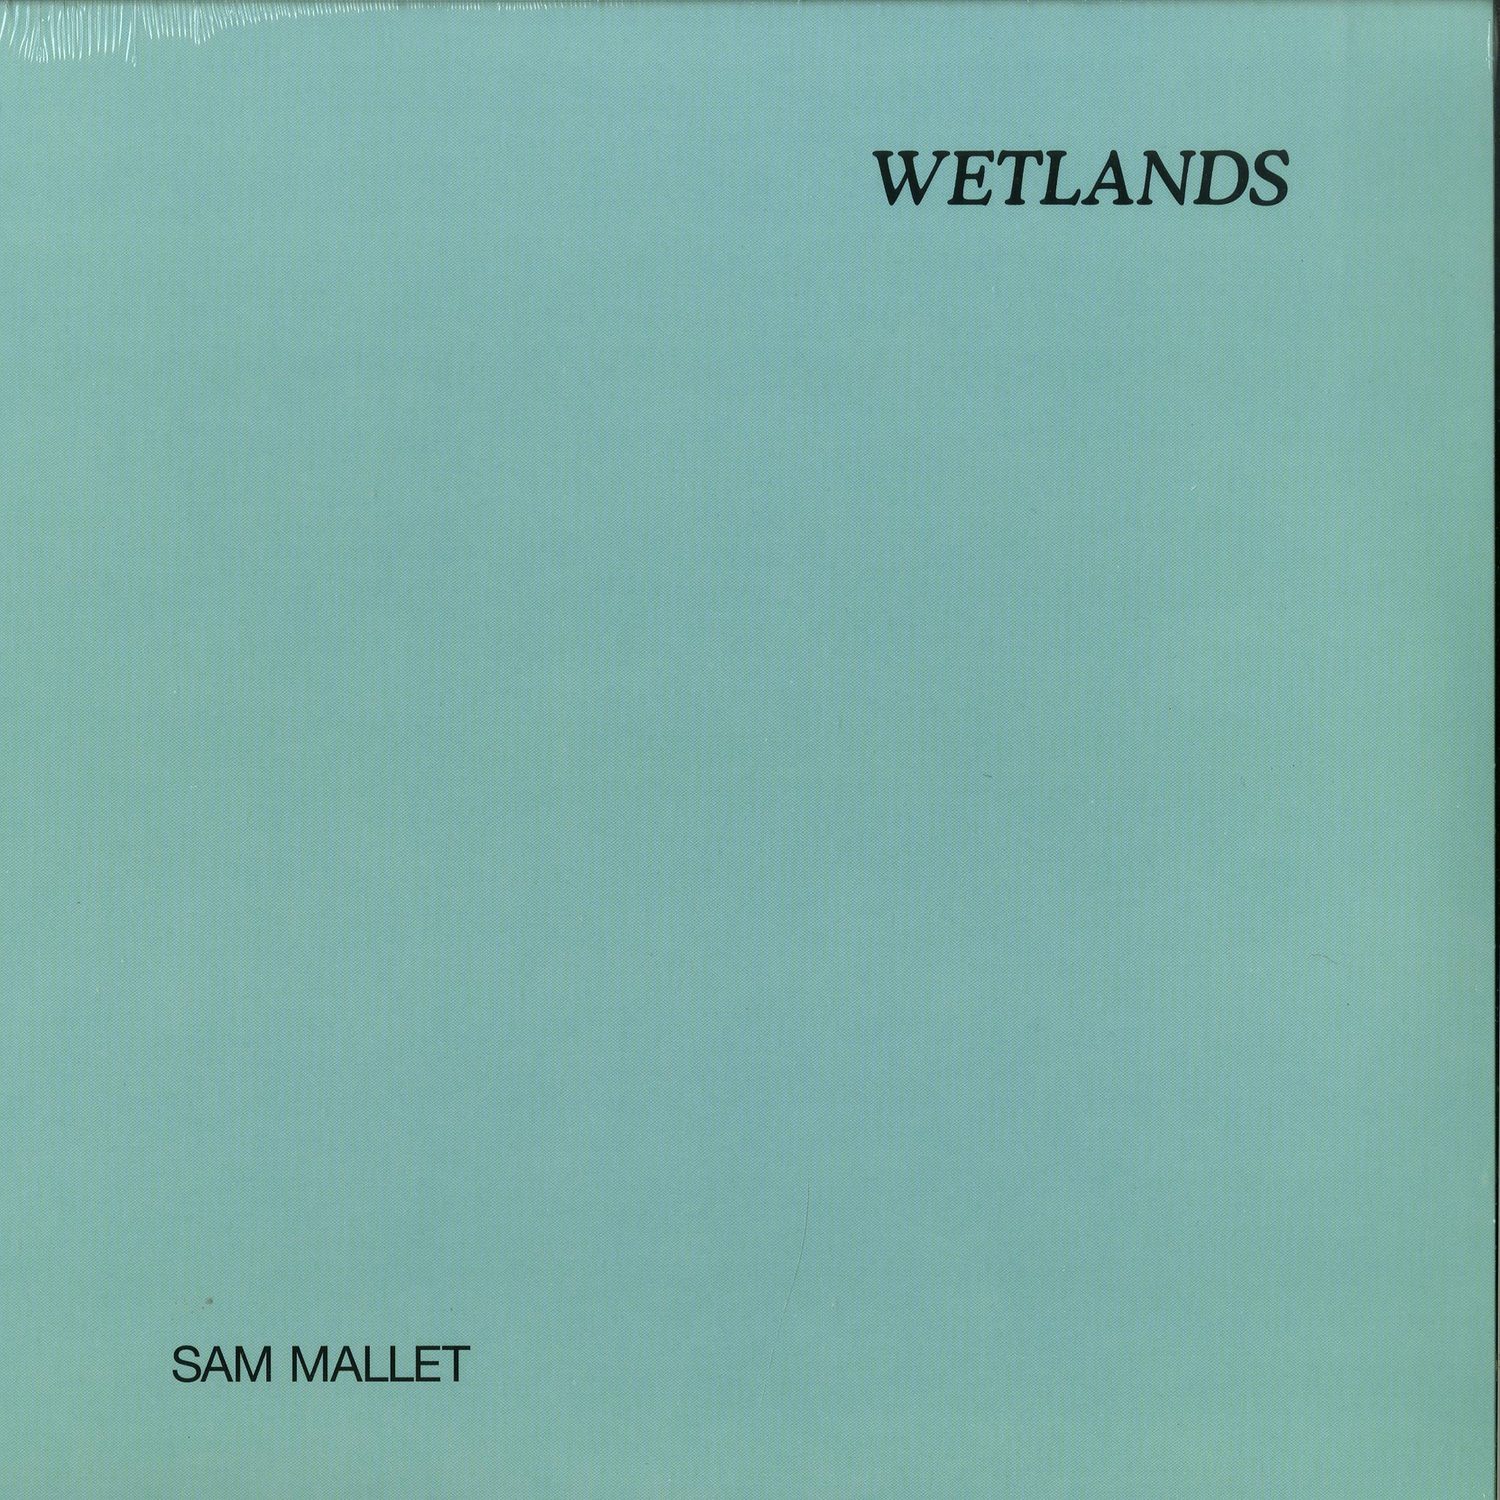 Sam Mallet - WETLANDS 